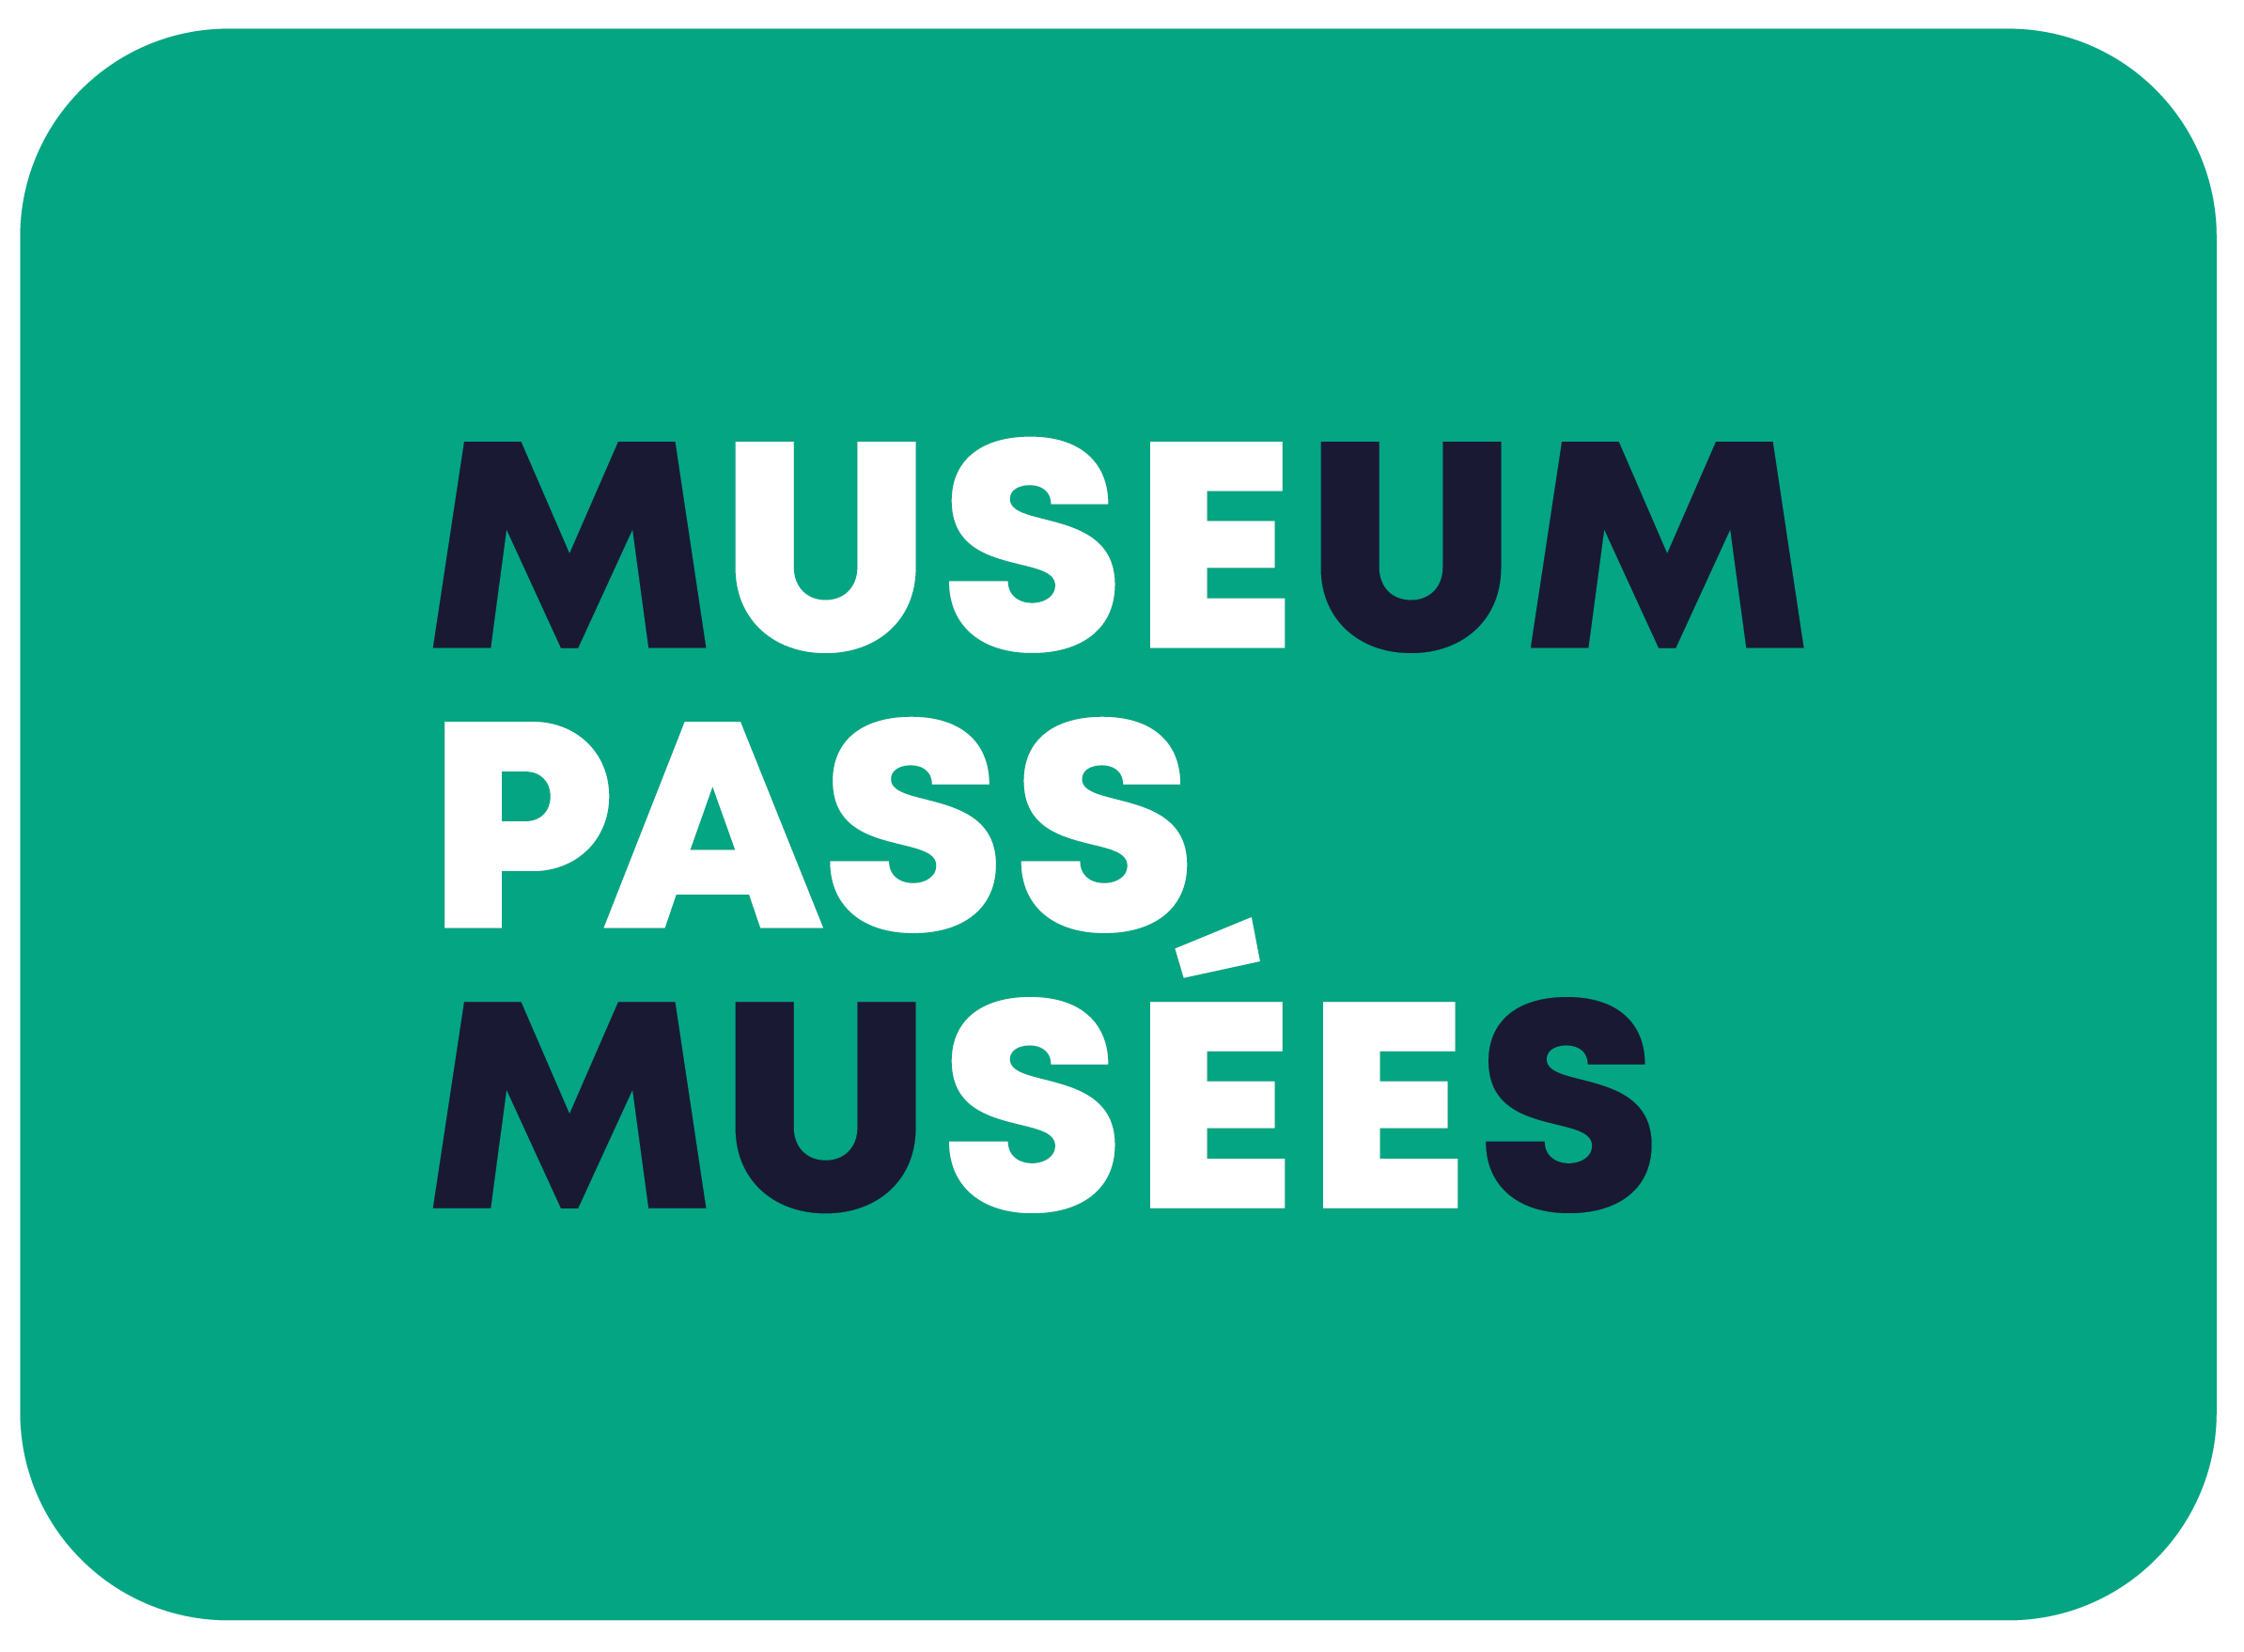 museumpass